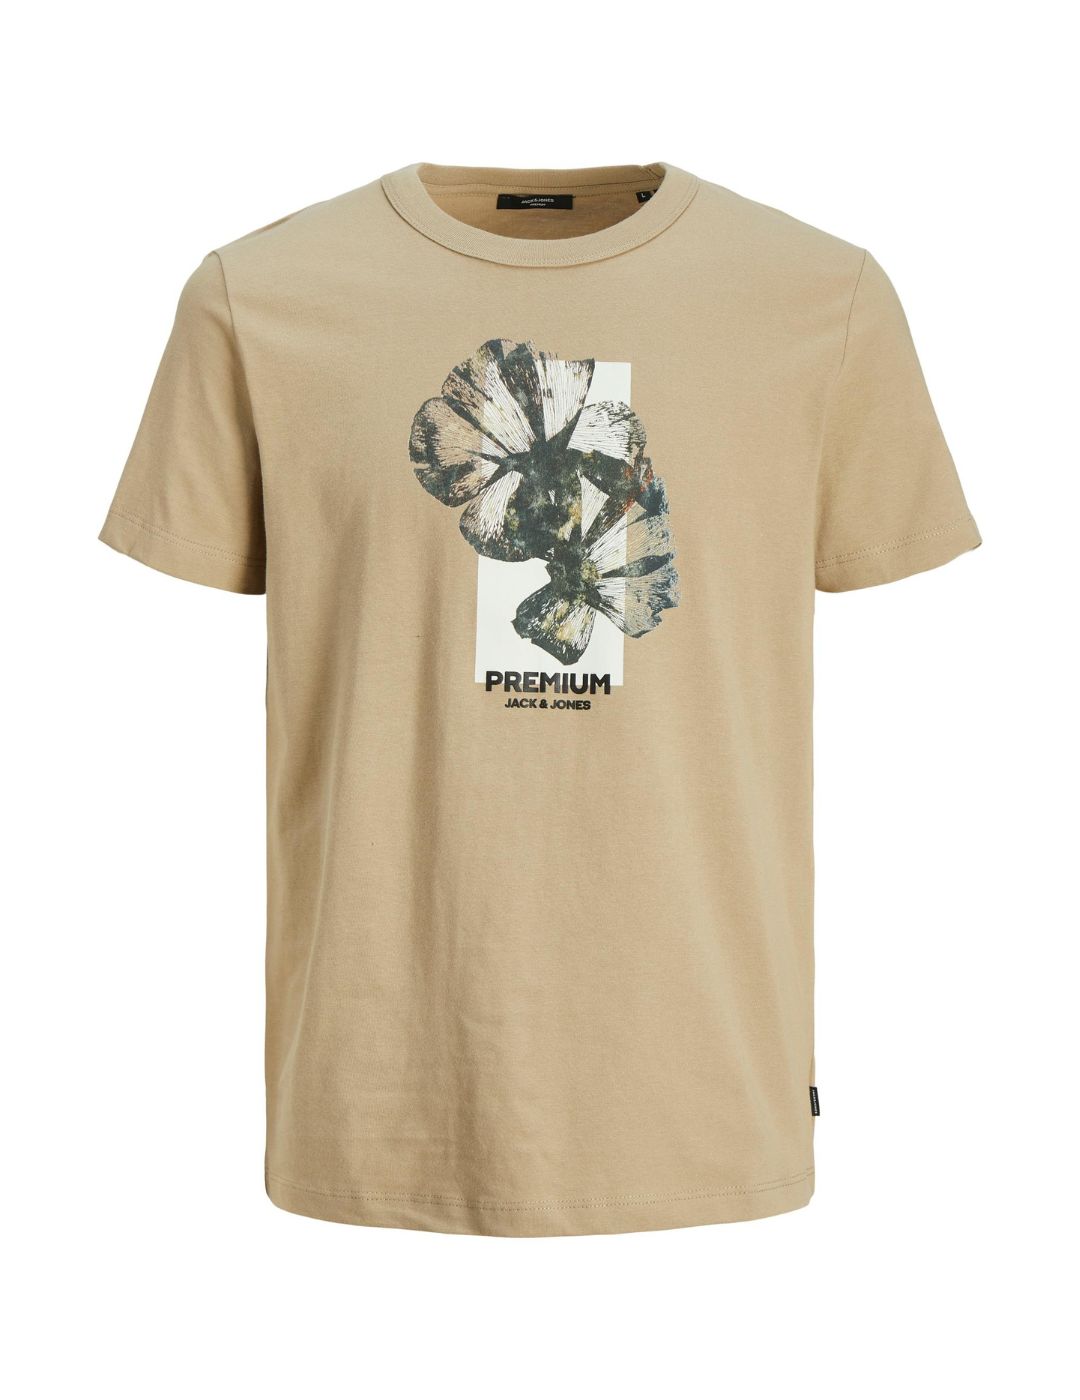 Camiseta Jack and Jones Premium Print Beige - Bicos de Fío